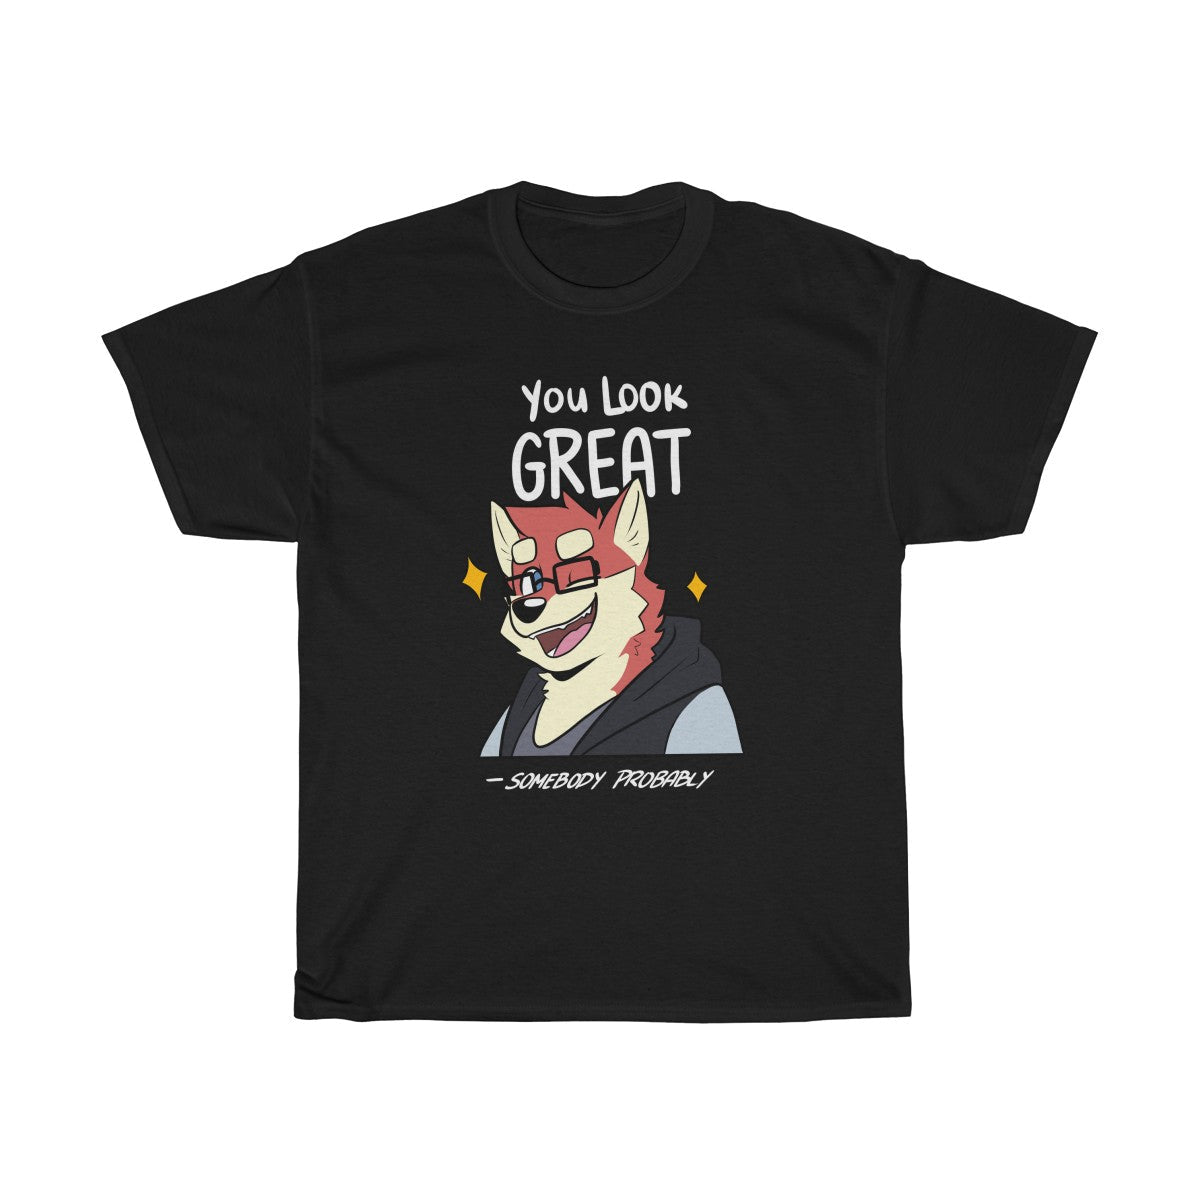 You Look Great - T-Shirt T-Shirt Ooka Black S 